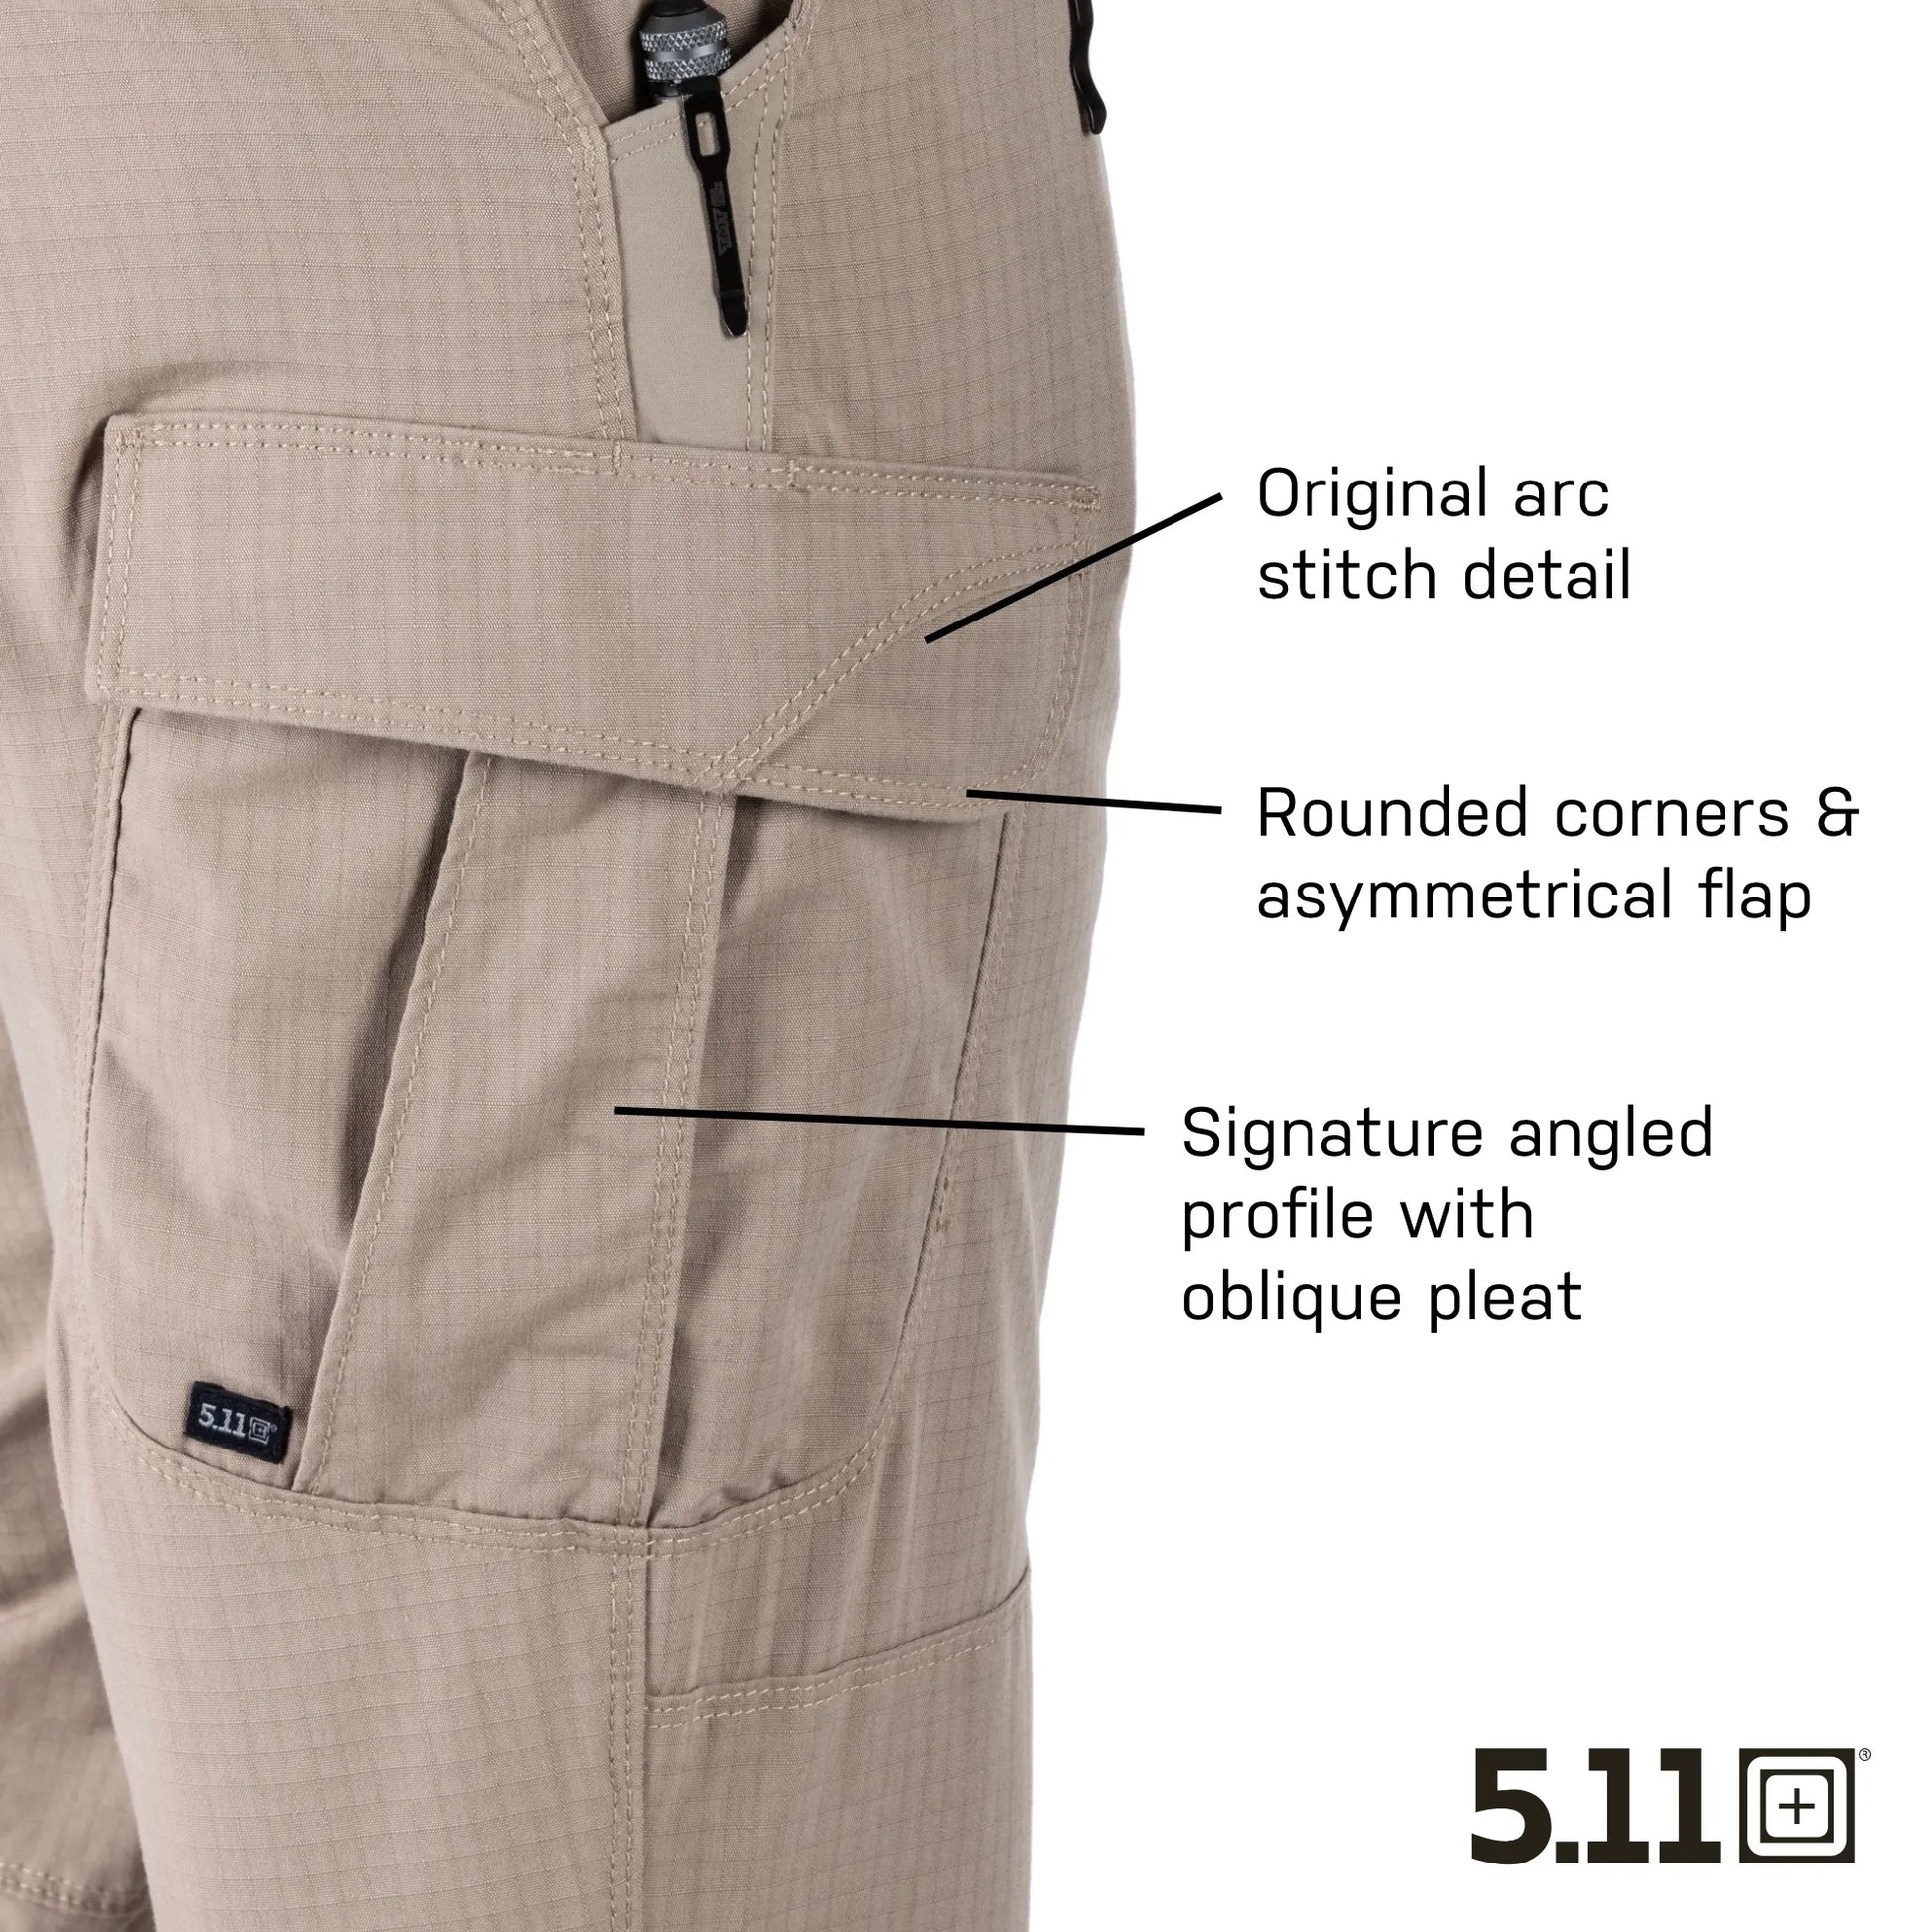 5.11 Tactical Women's STRYKE Pants - Black-Tac Essentials